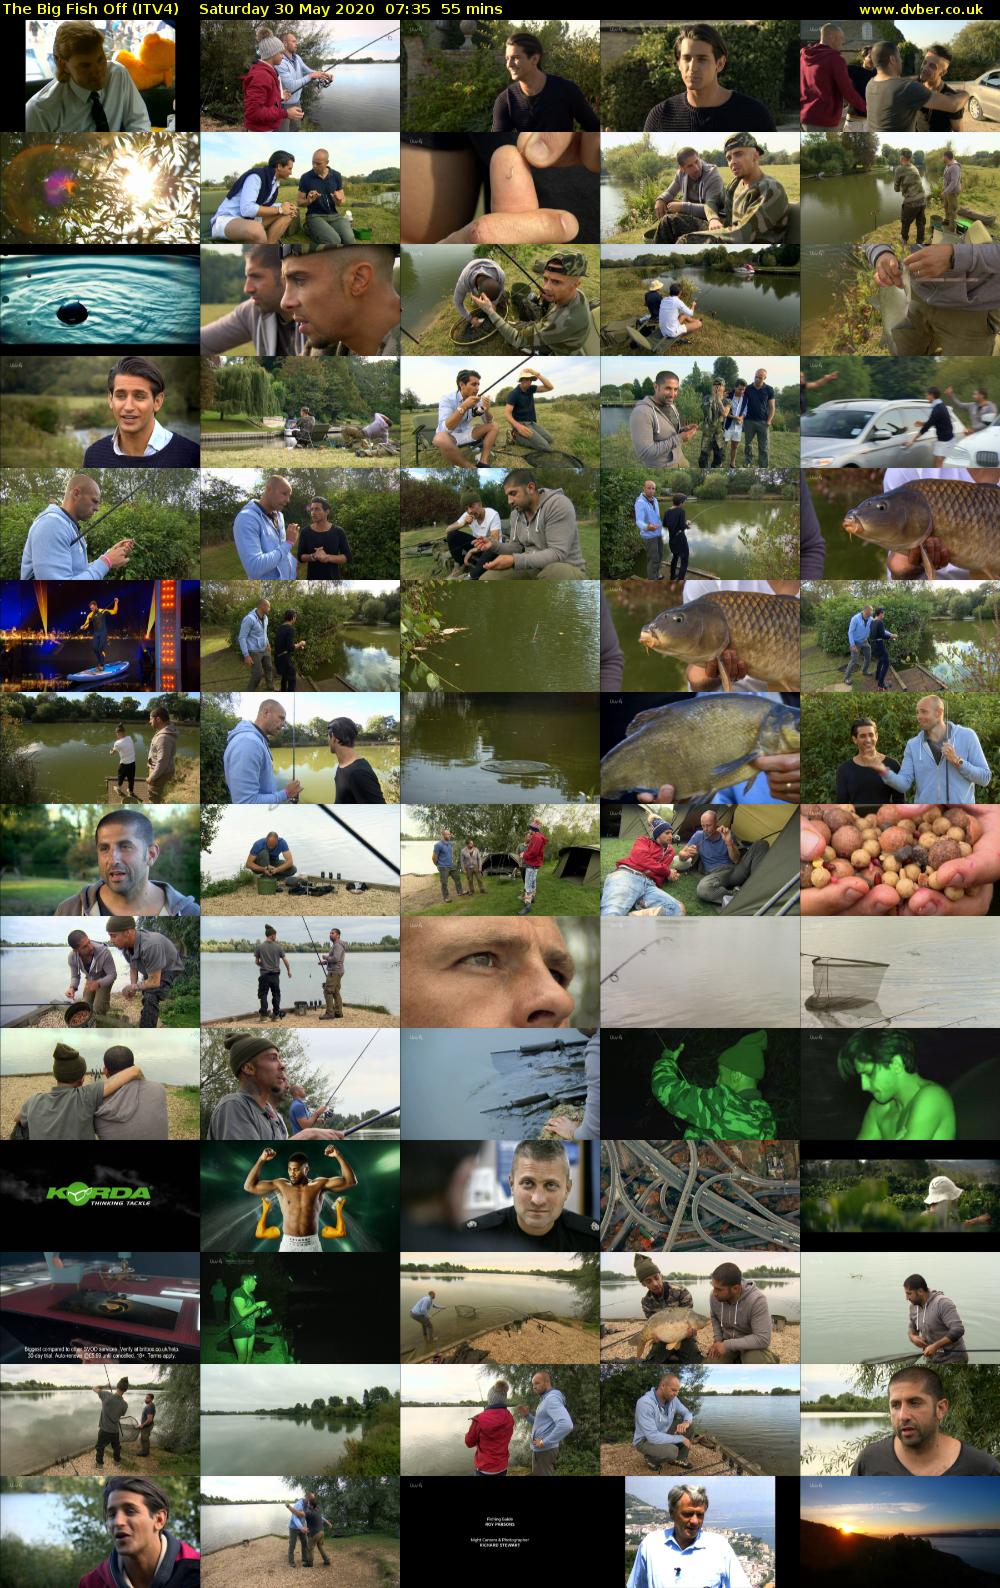 The Big Fish Off (ITV4) Saturday 30 May 2020 07:35 - 08:30